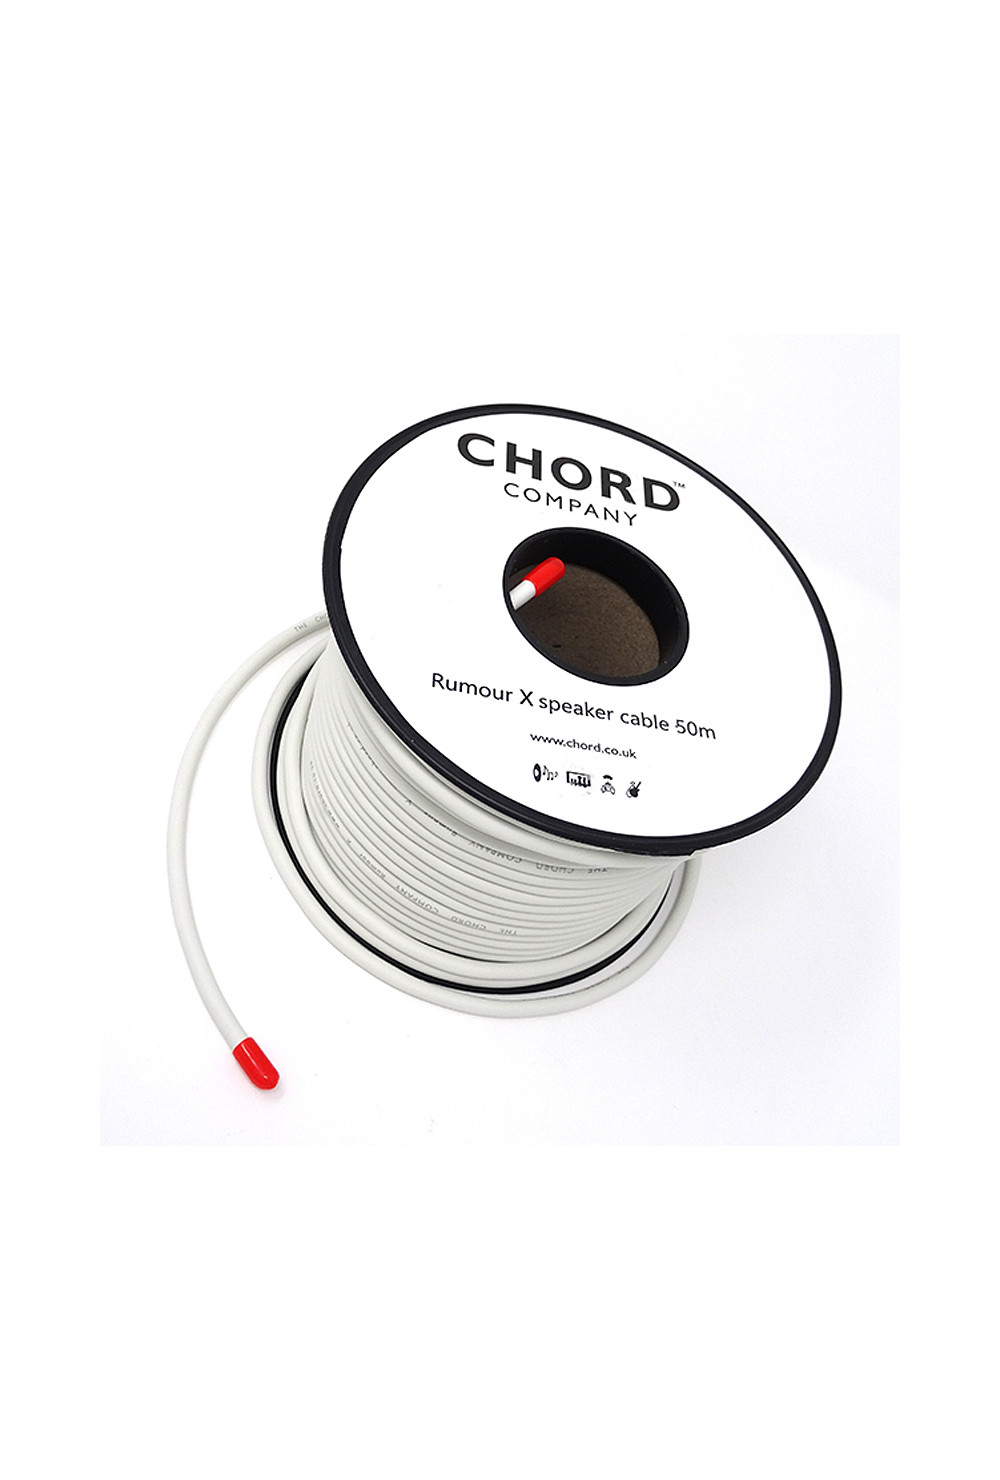 CHORD RumourX Speaker Cable